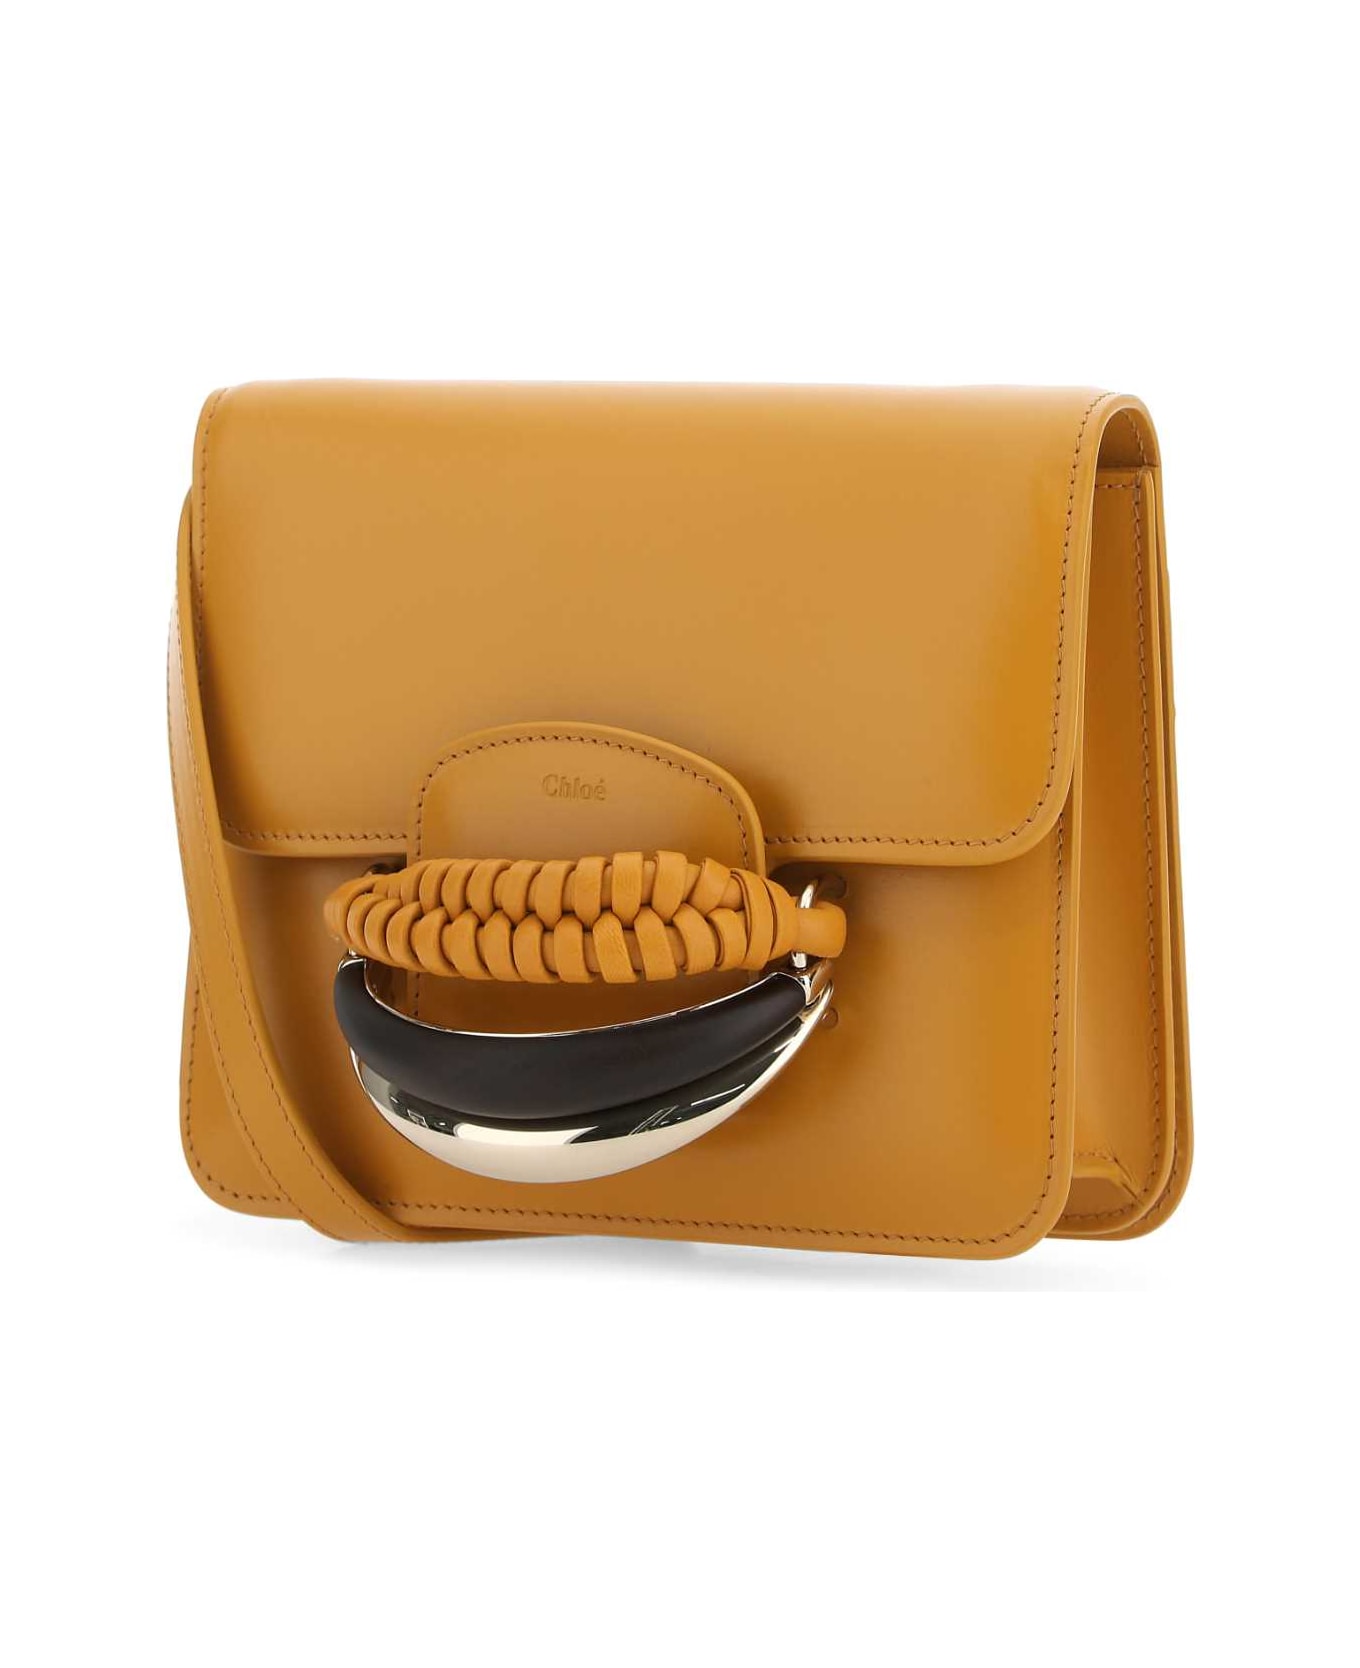 Chloé Mustard Leather Kattie Clutch - 216 ショルダーバッグ